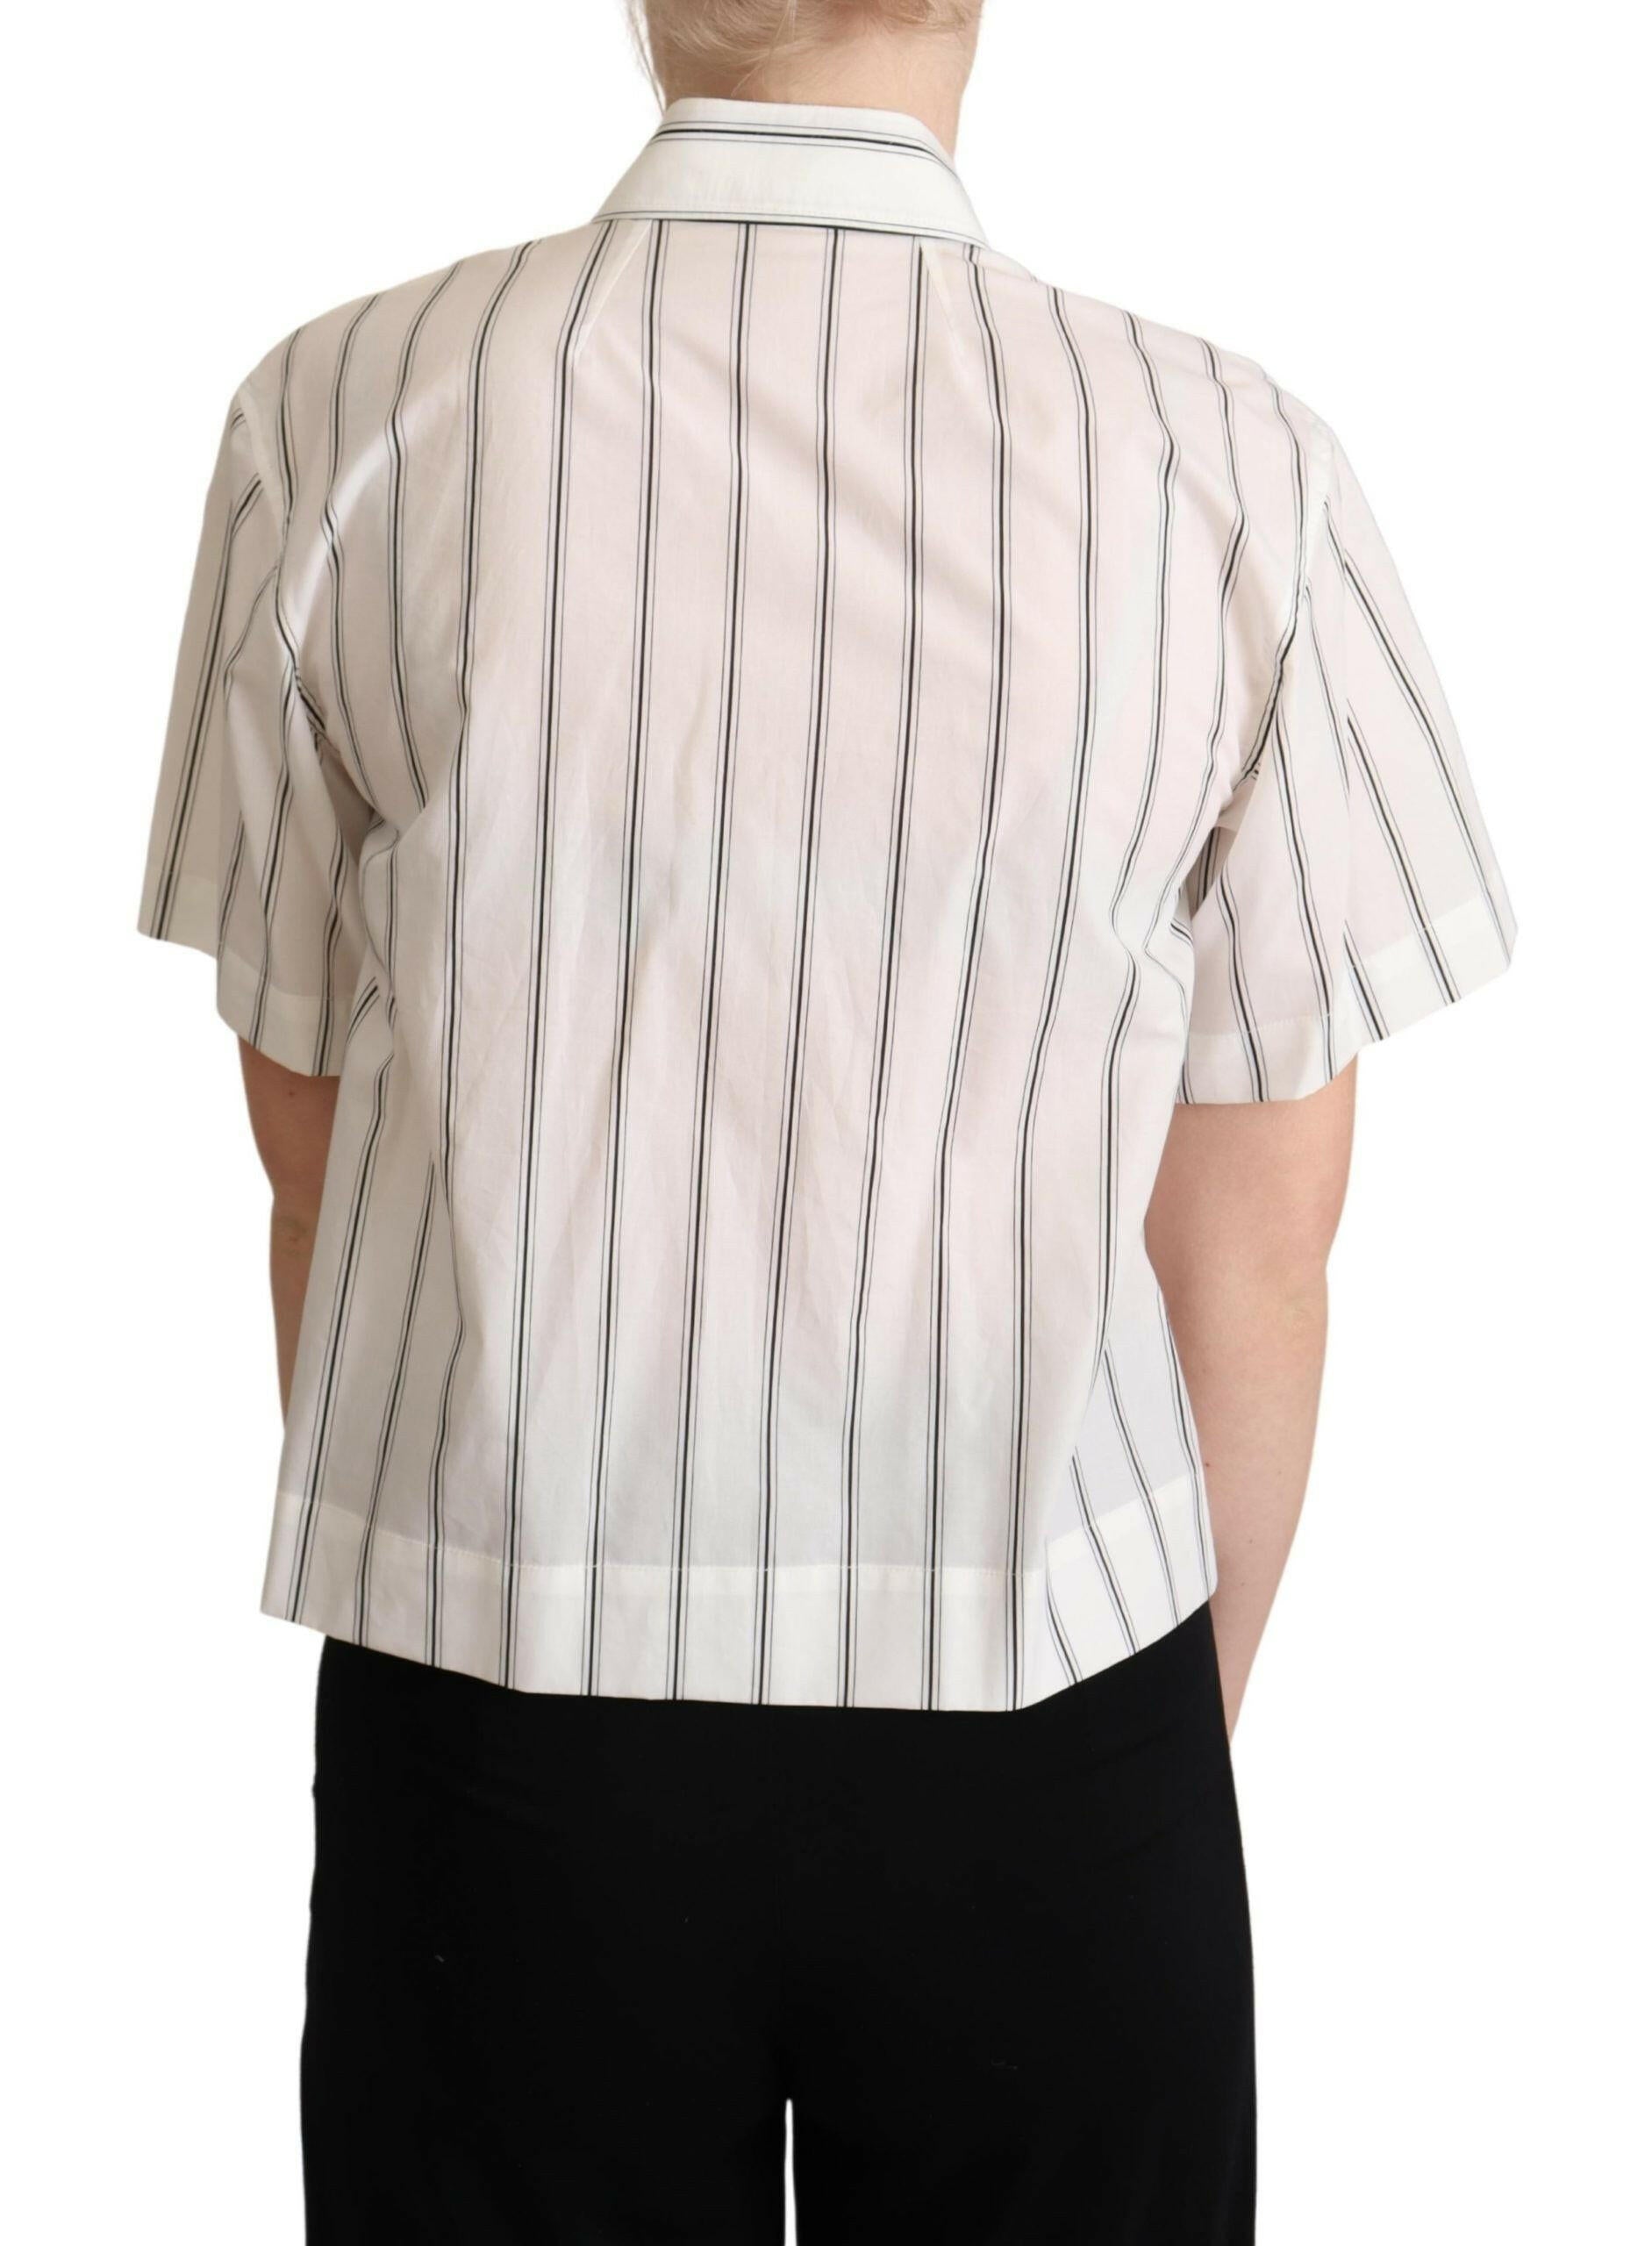 Dolce & Gabbana White Black Stripes Collared Shirt Top - GENUINE AUTHENTIC BRAND LLC  